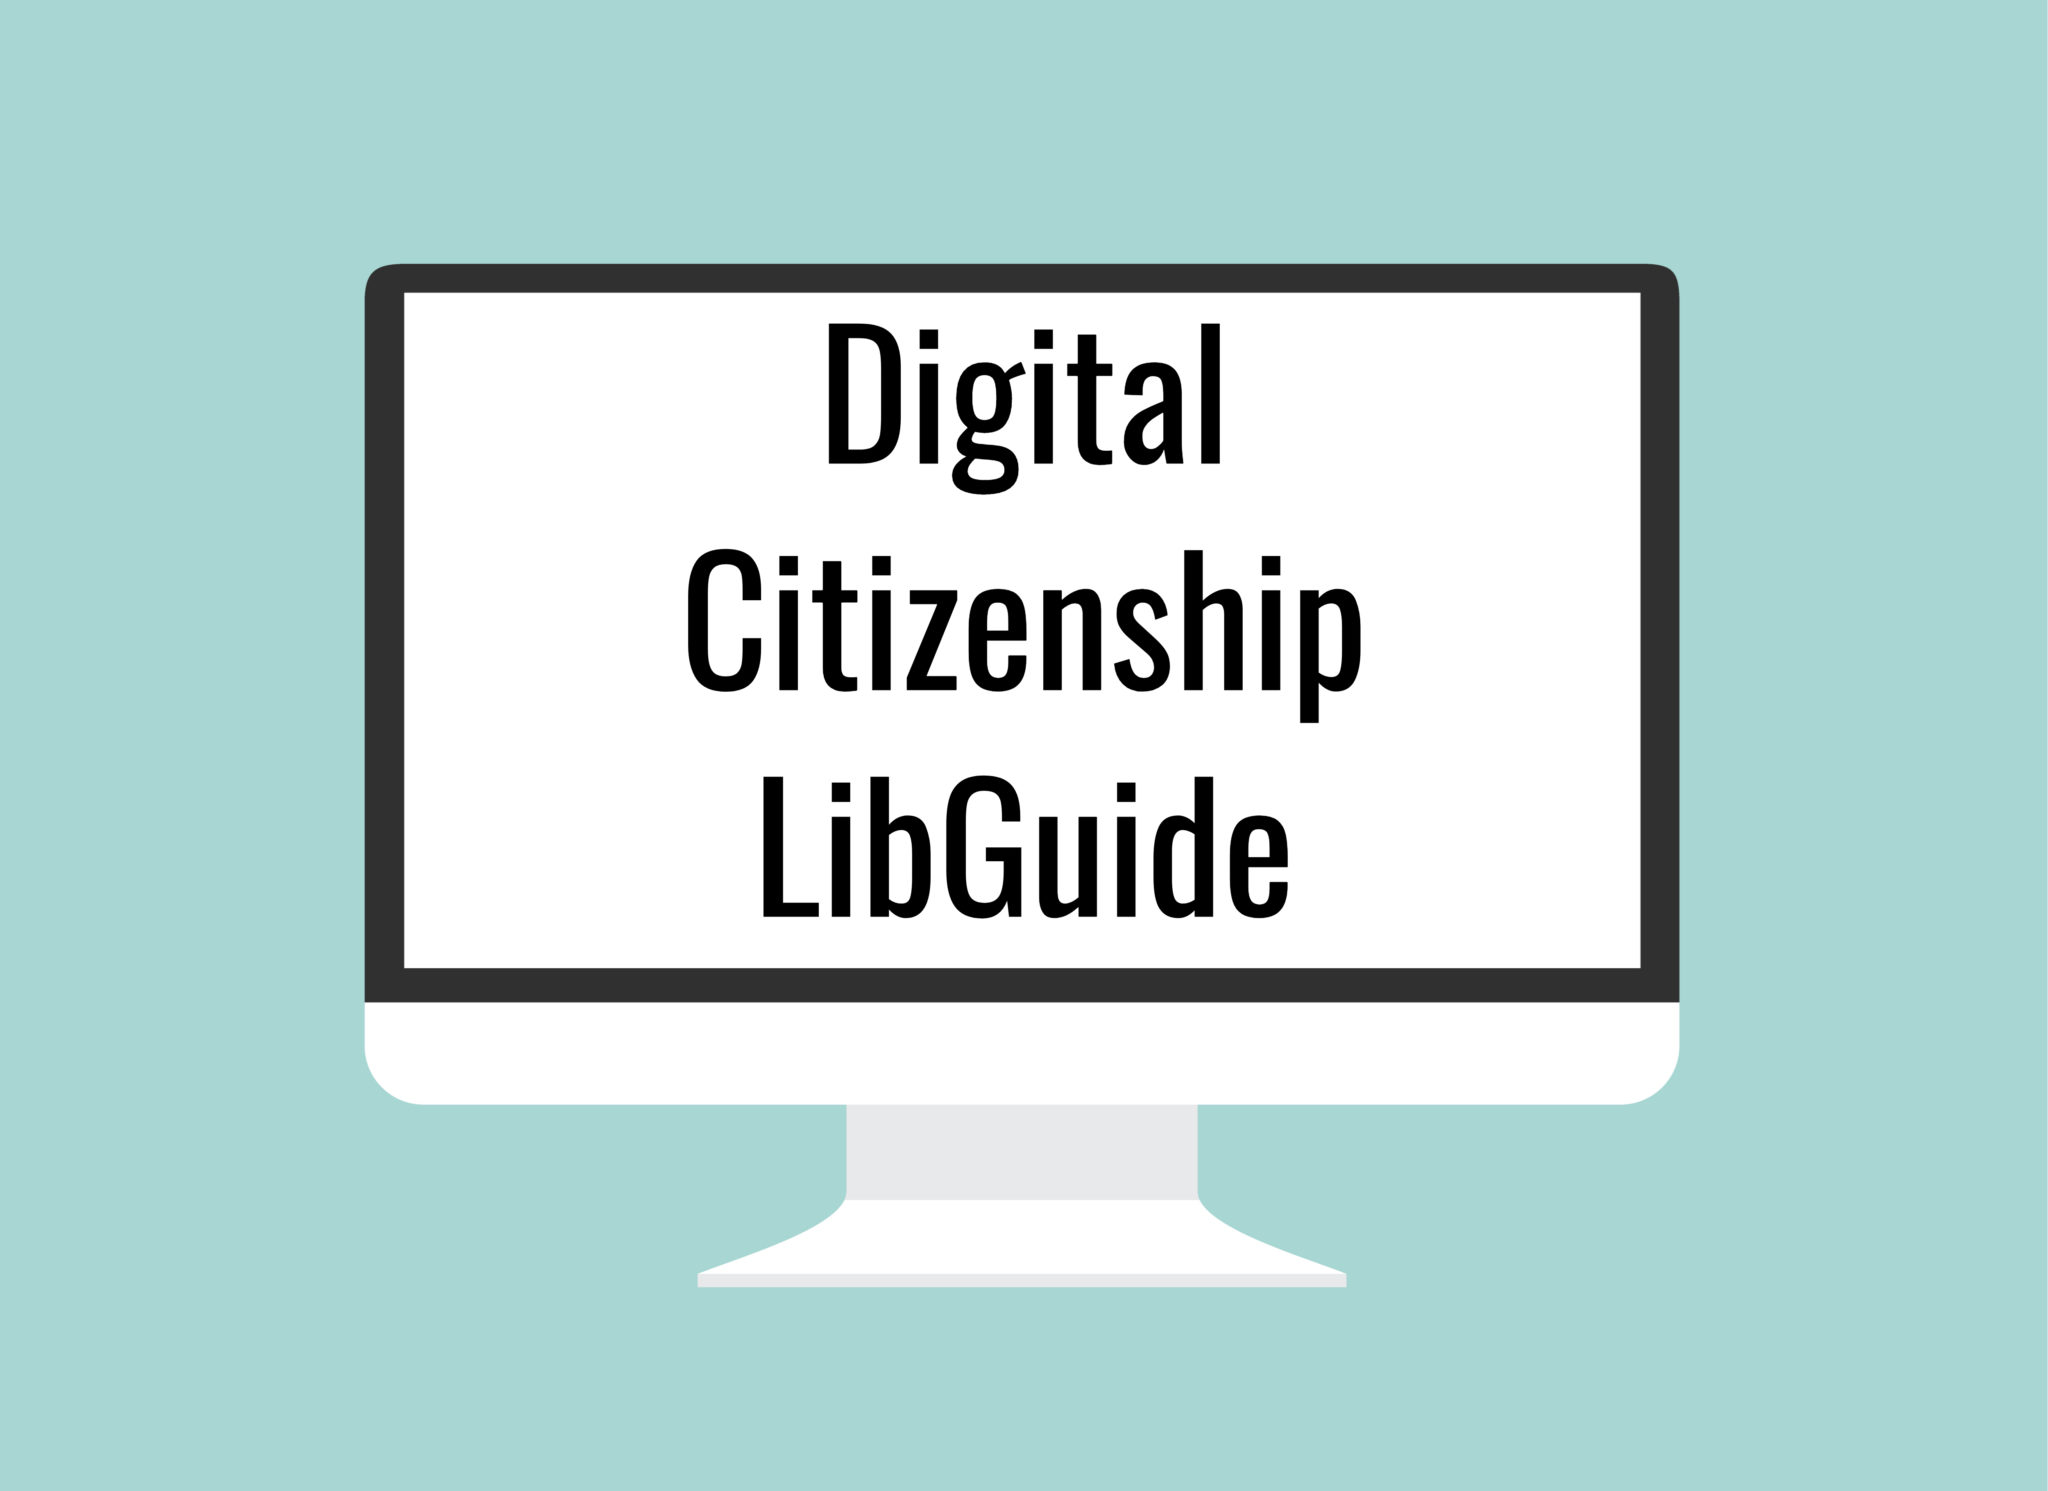 Digital Citizenship Lib Guide